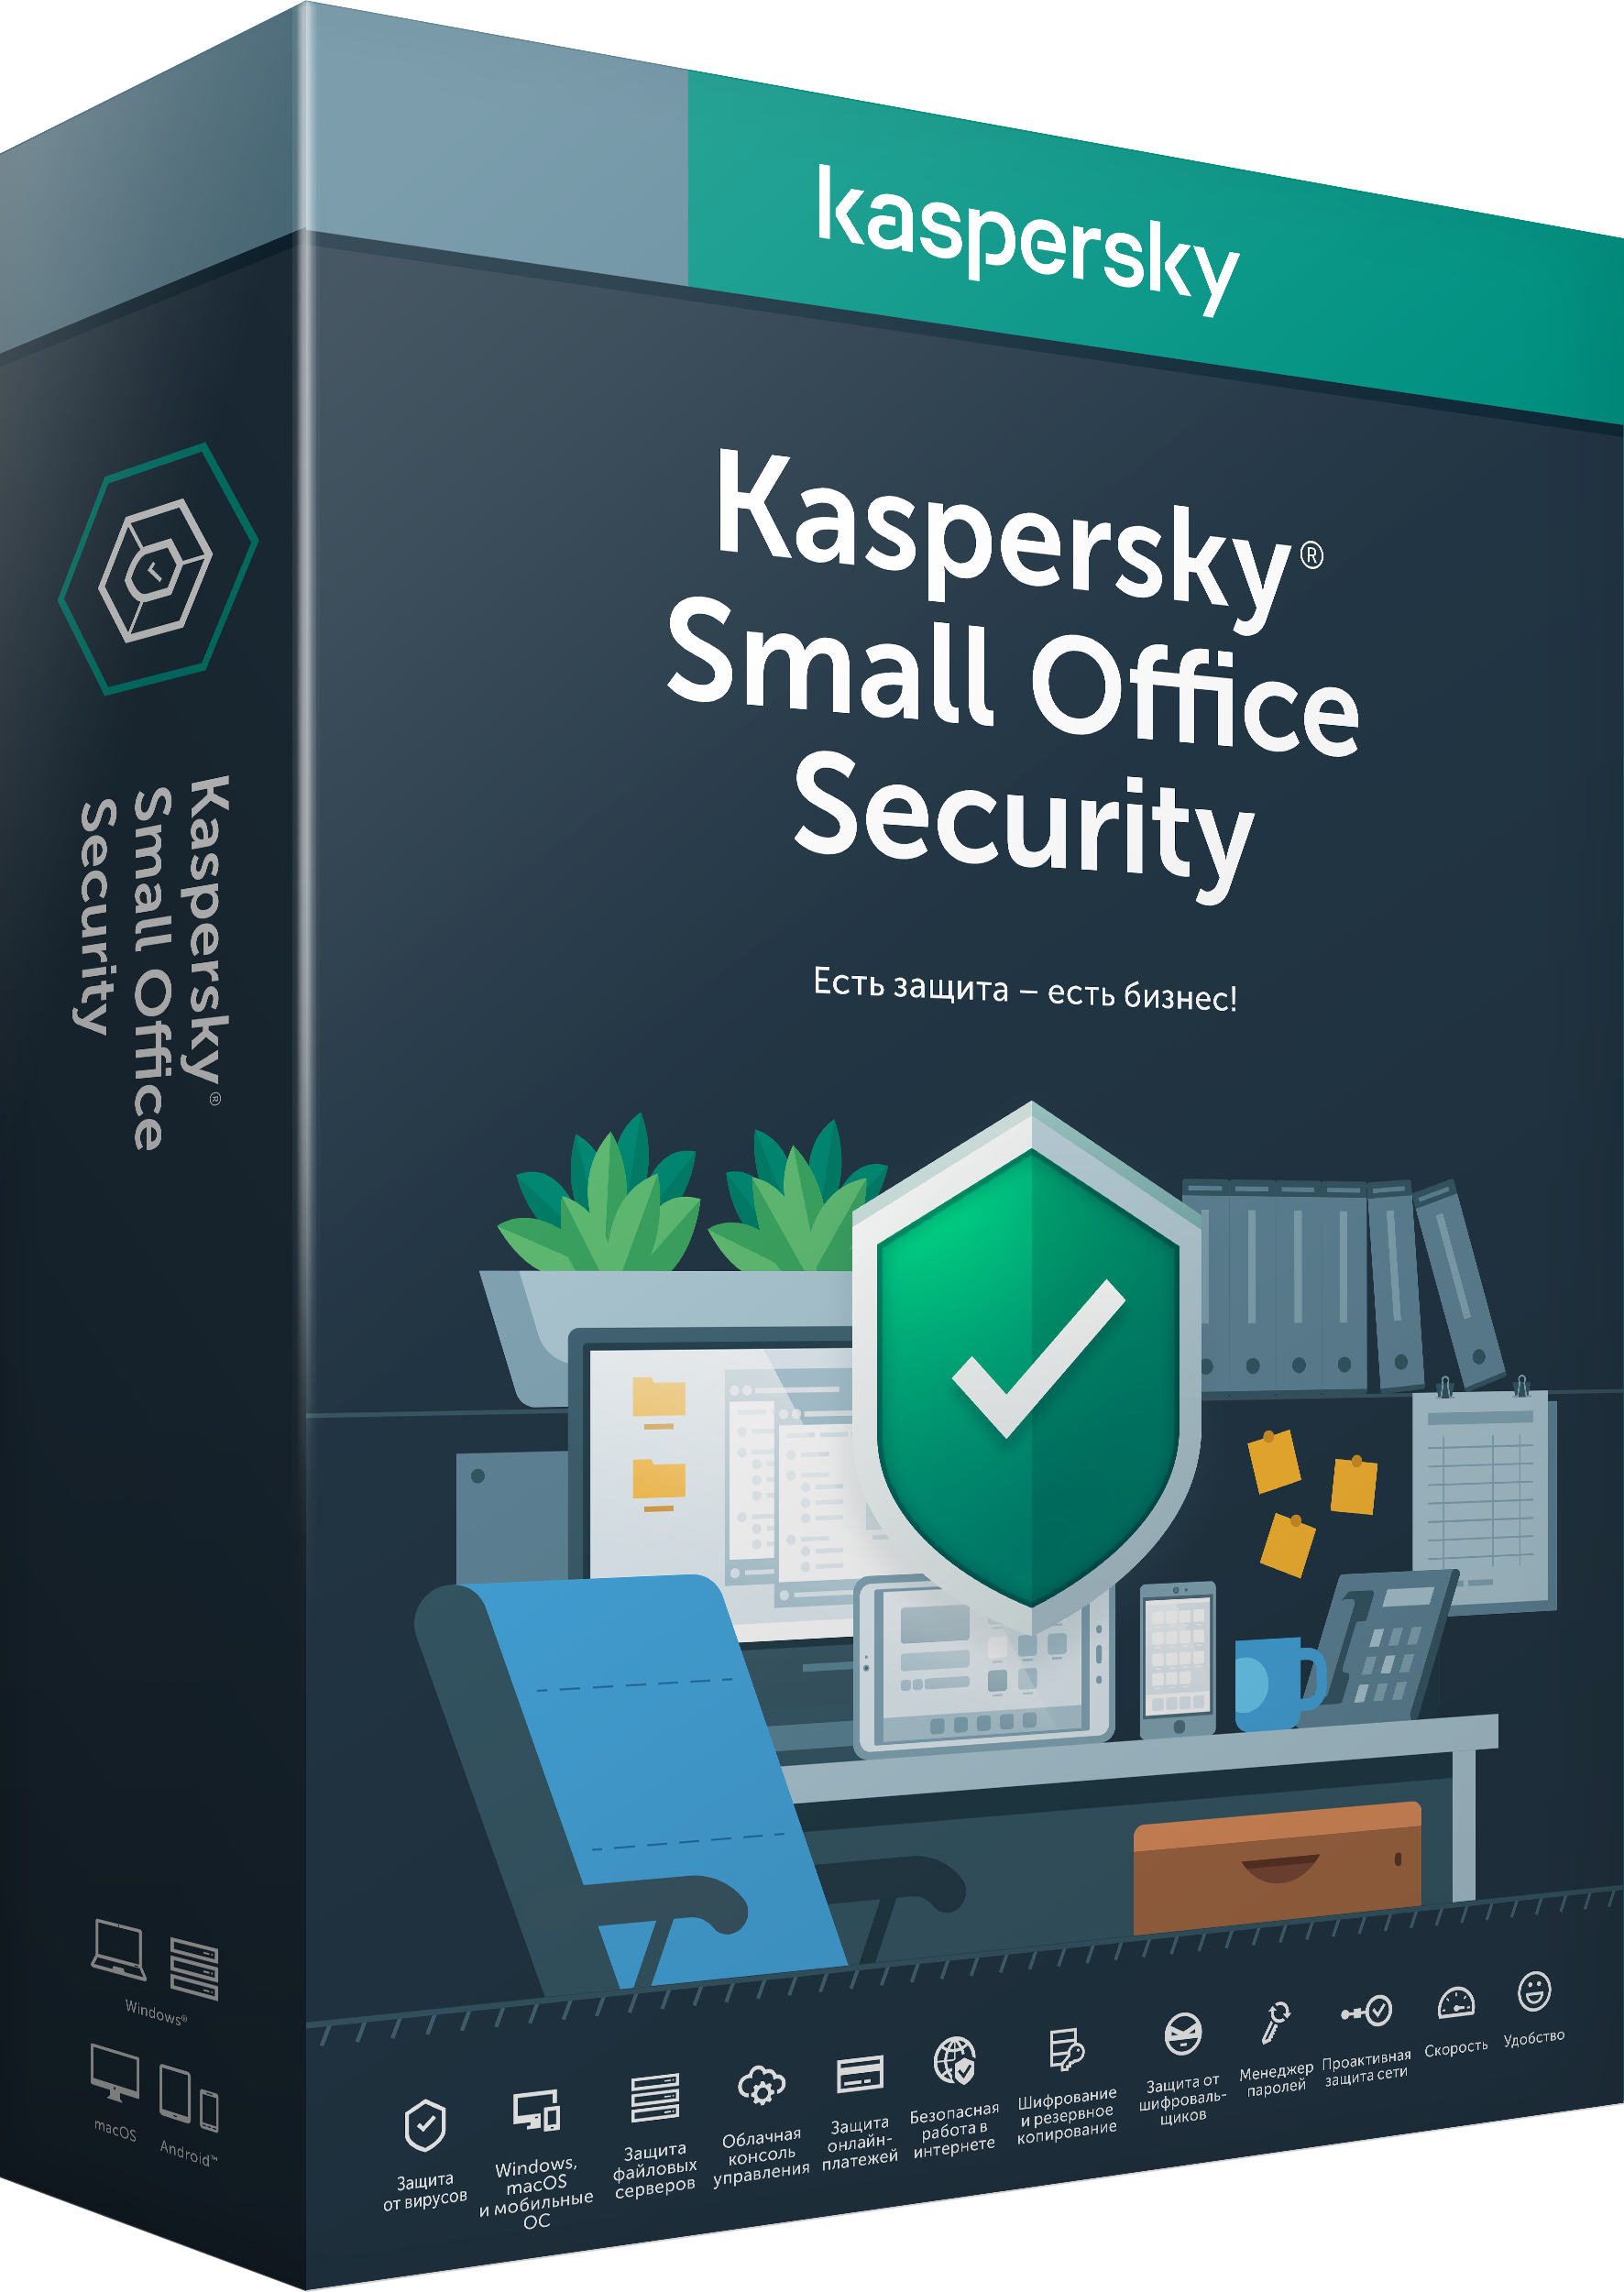 Kaspersky Small Office Security (продление лицензии на 1 год)